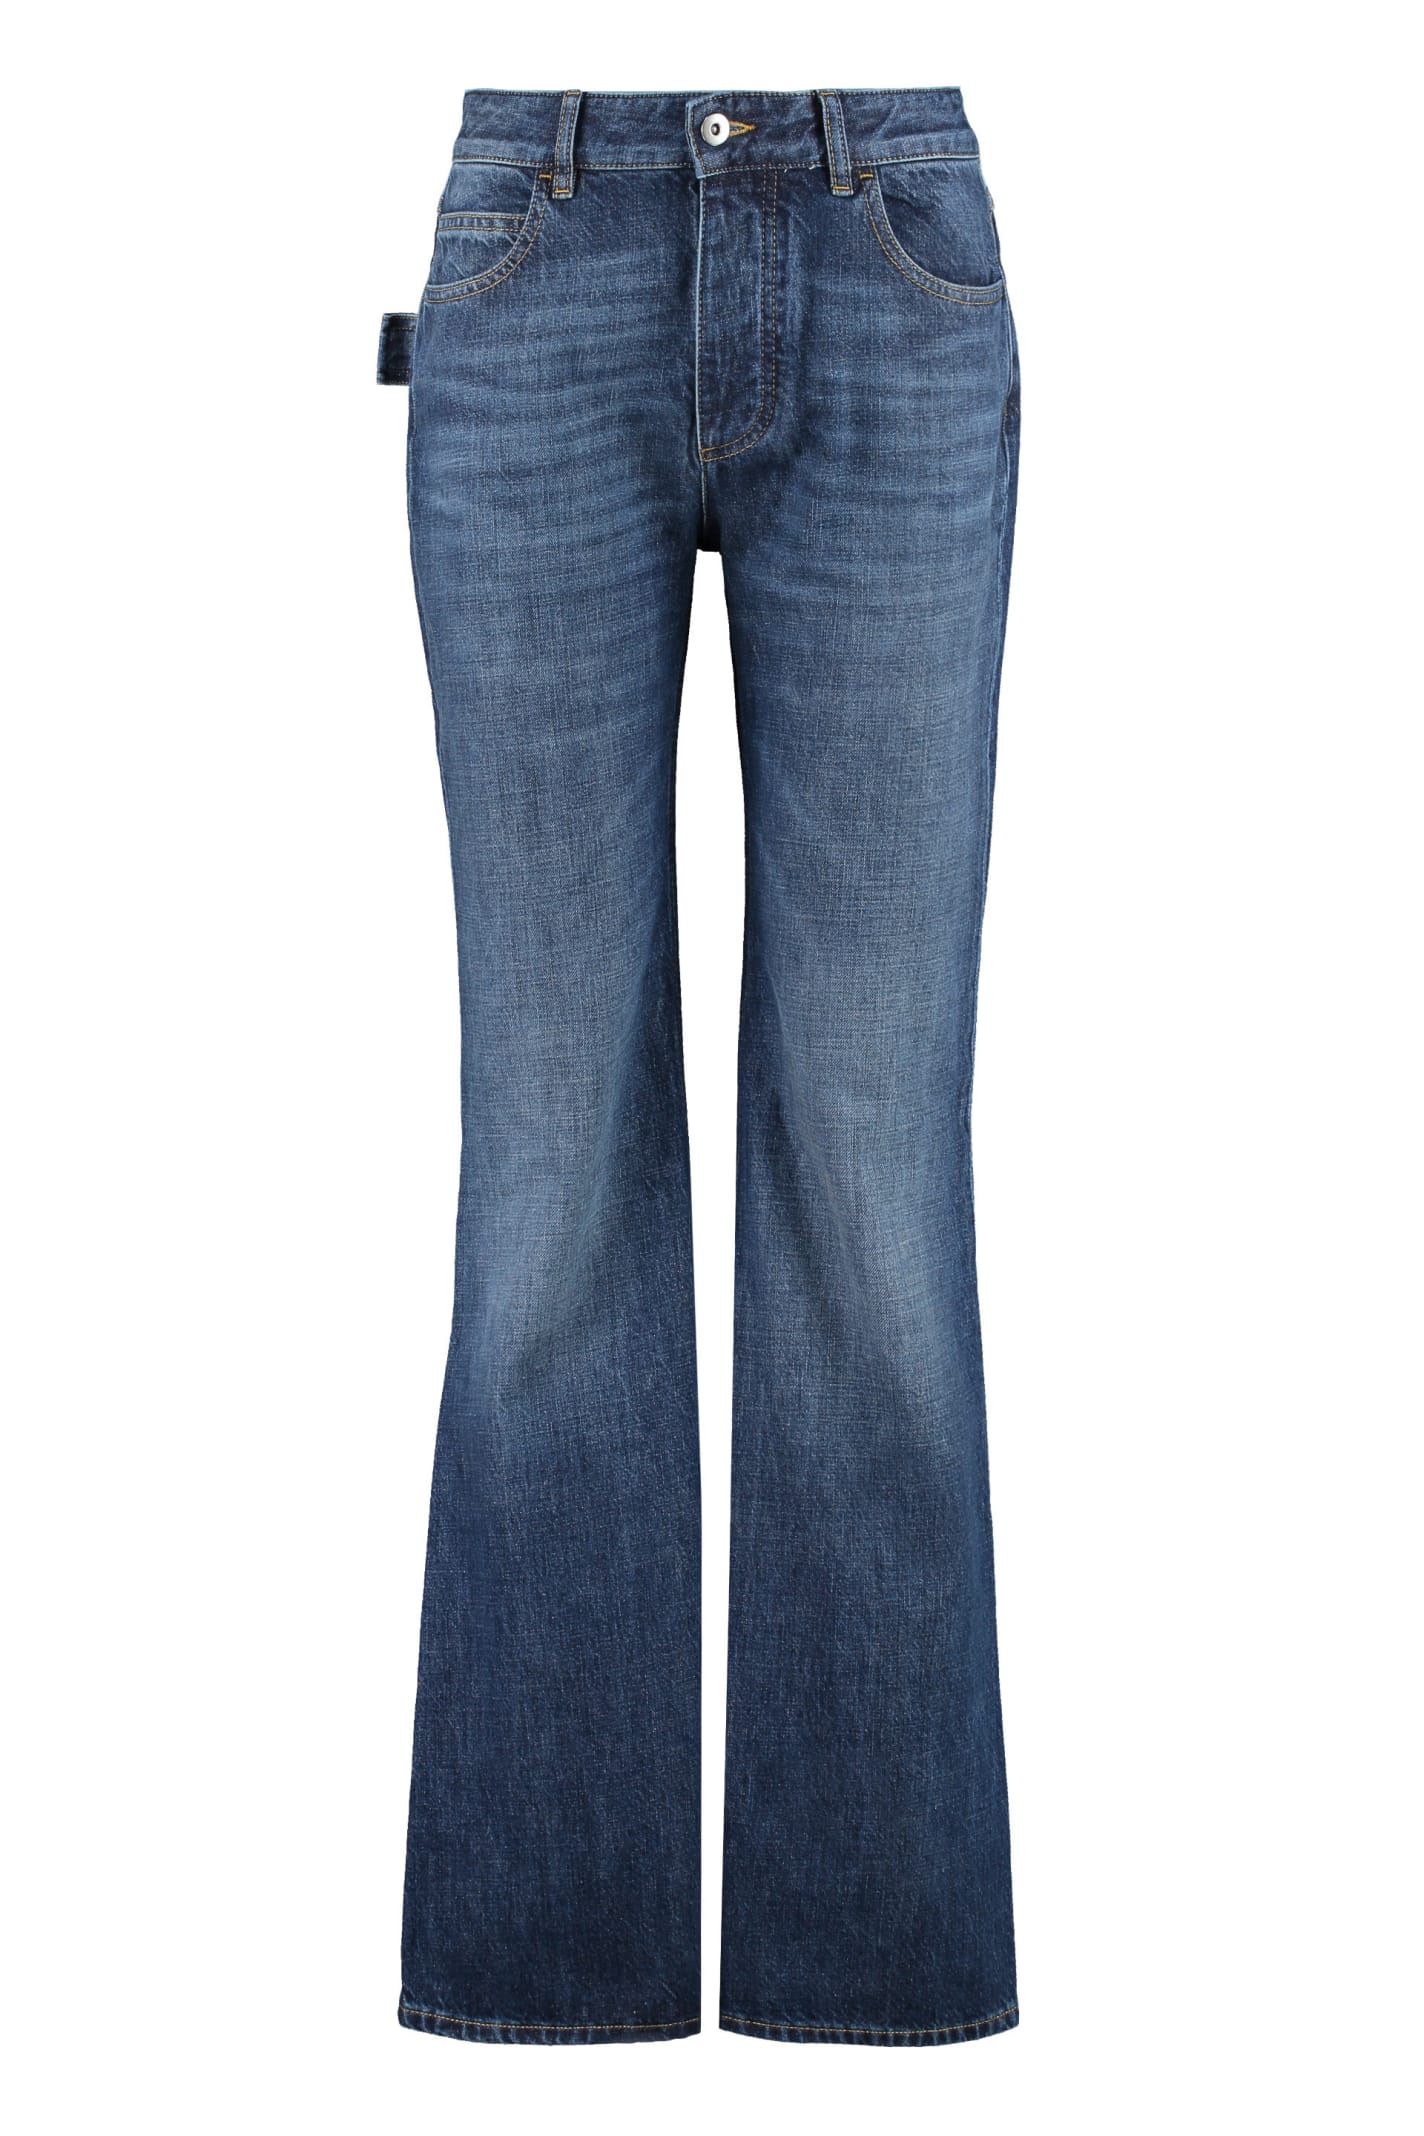 Bottega Veneta 5-pocket Jeans